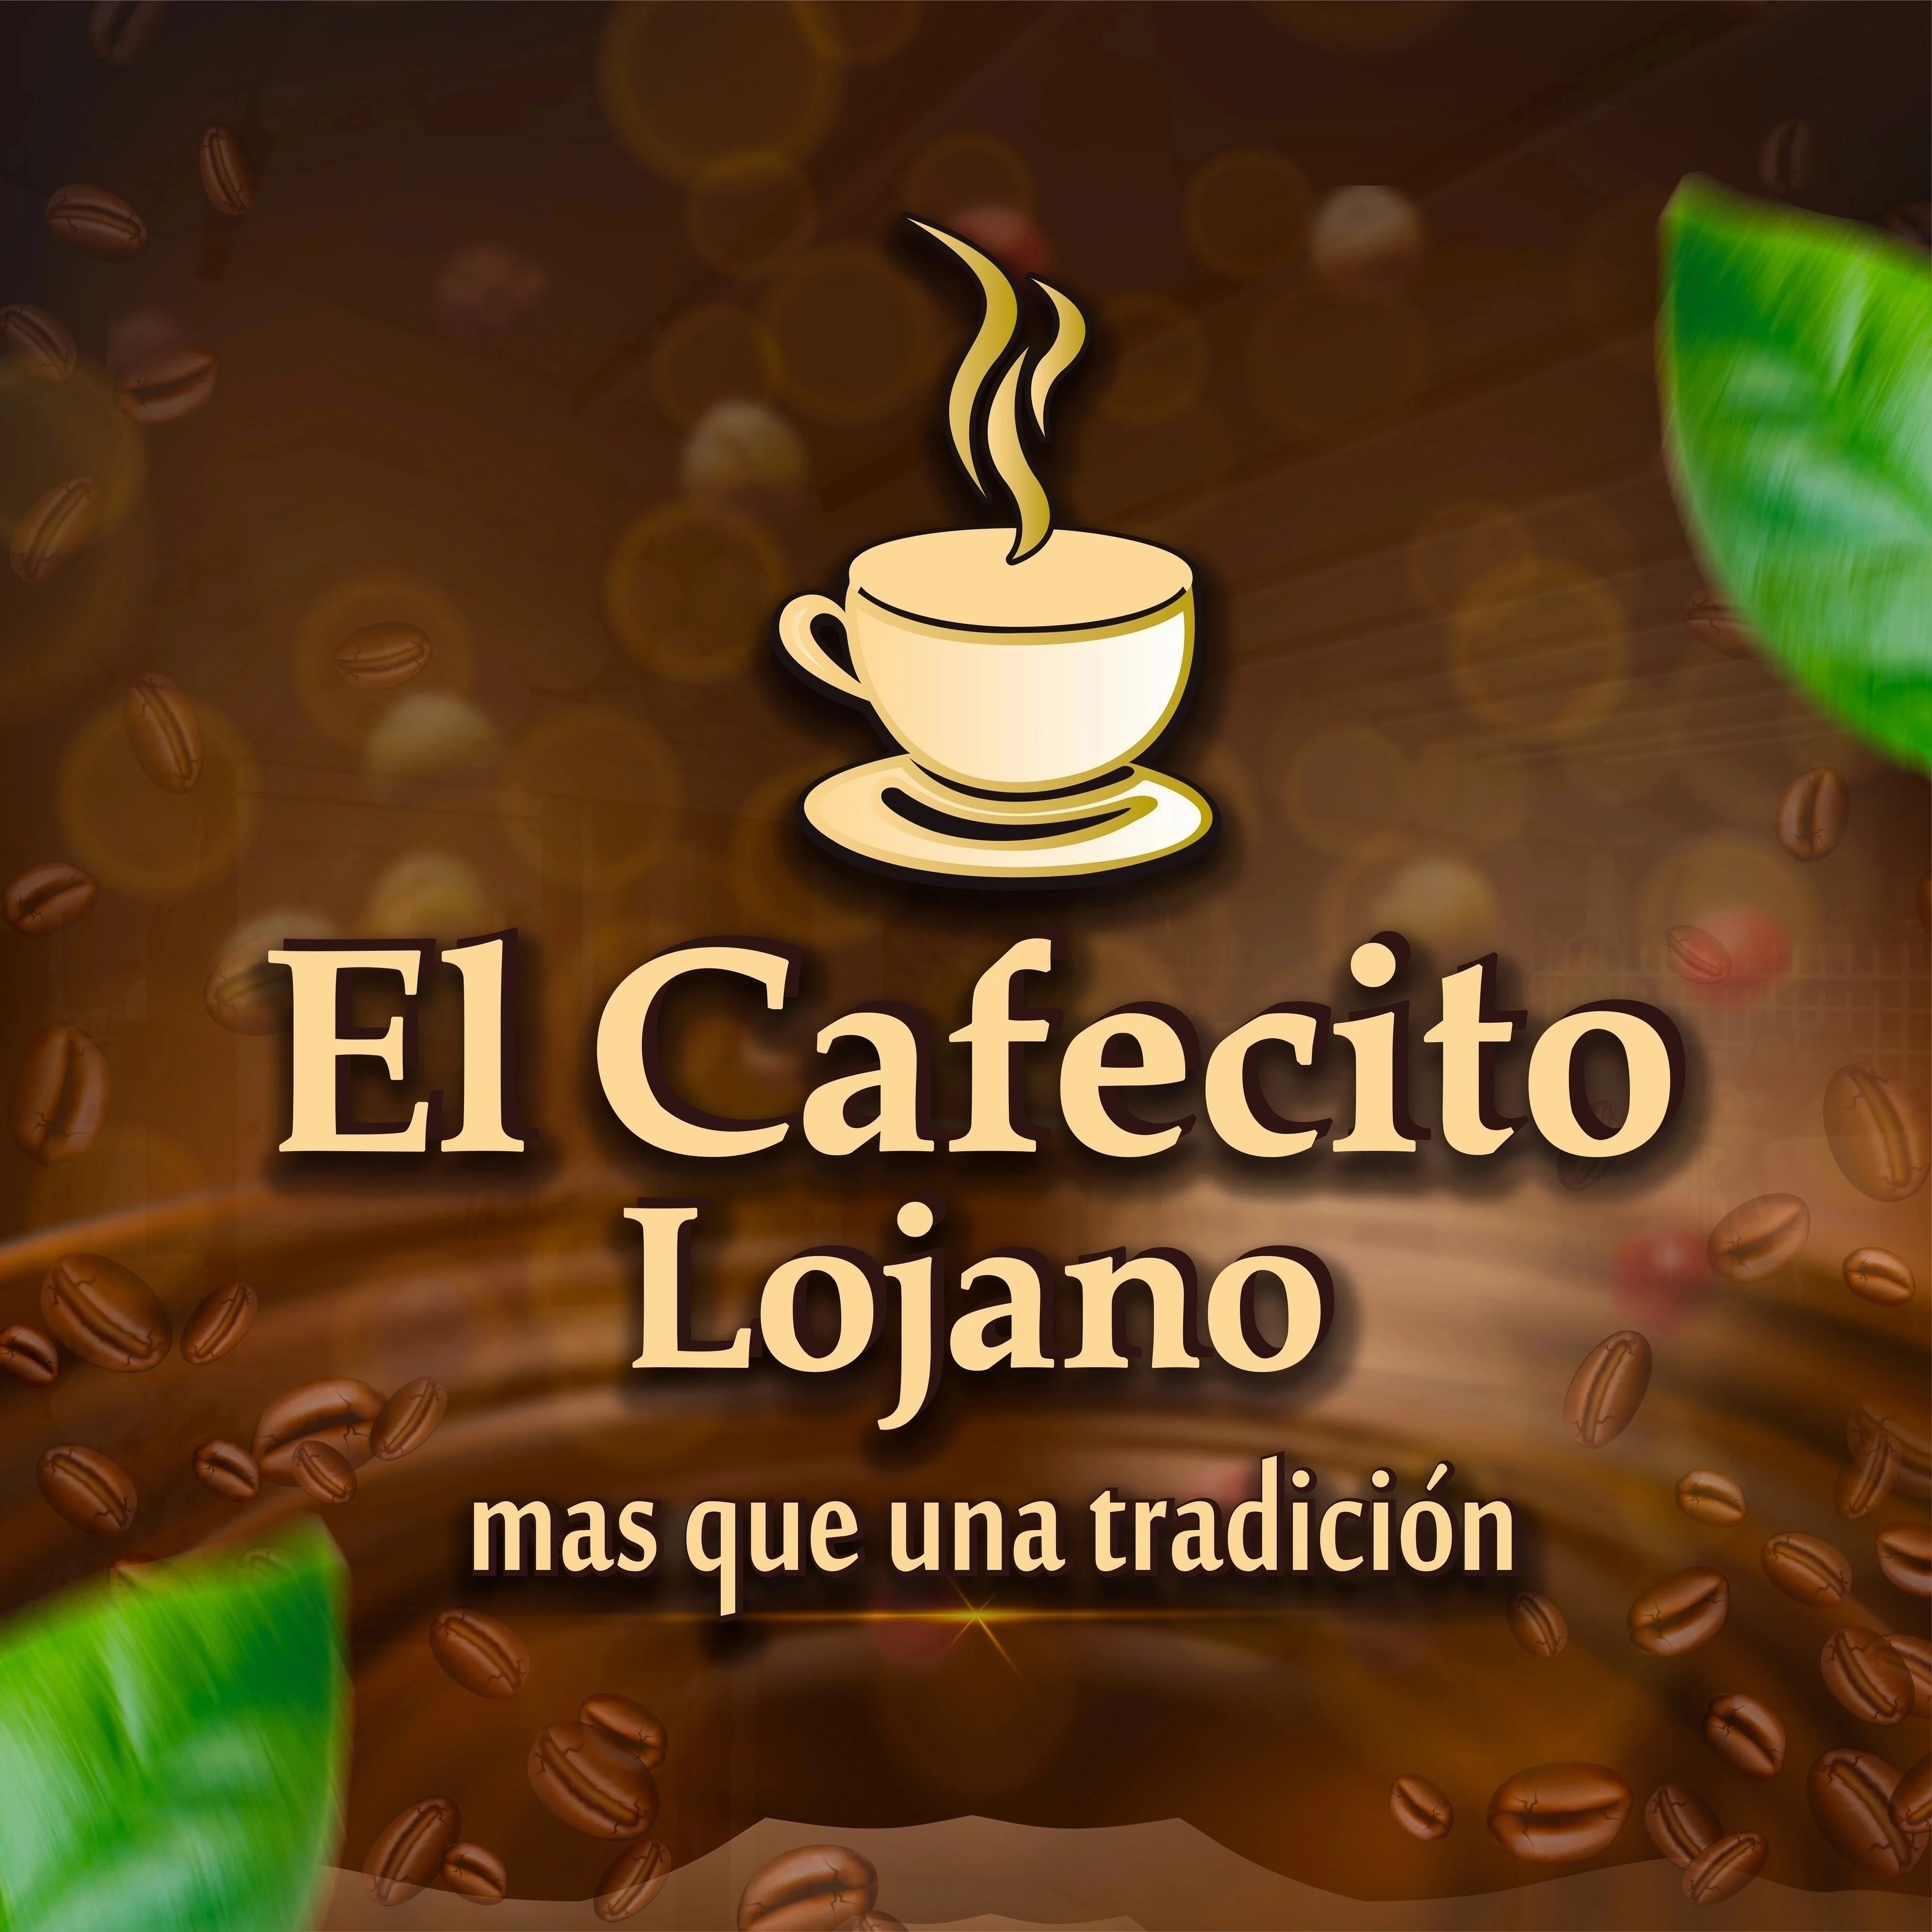 El Cafecito Lojano-4521